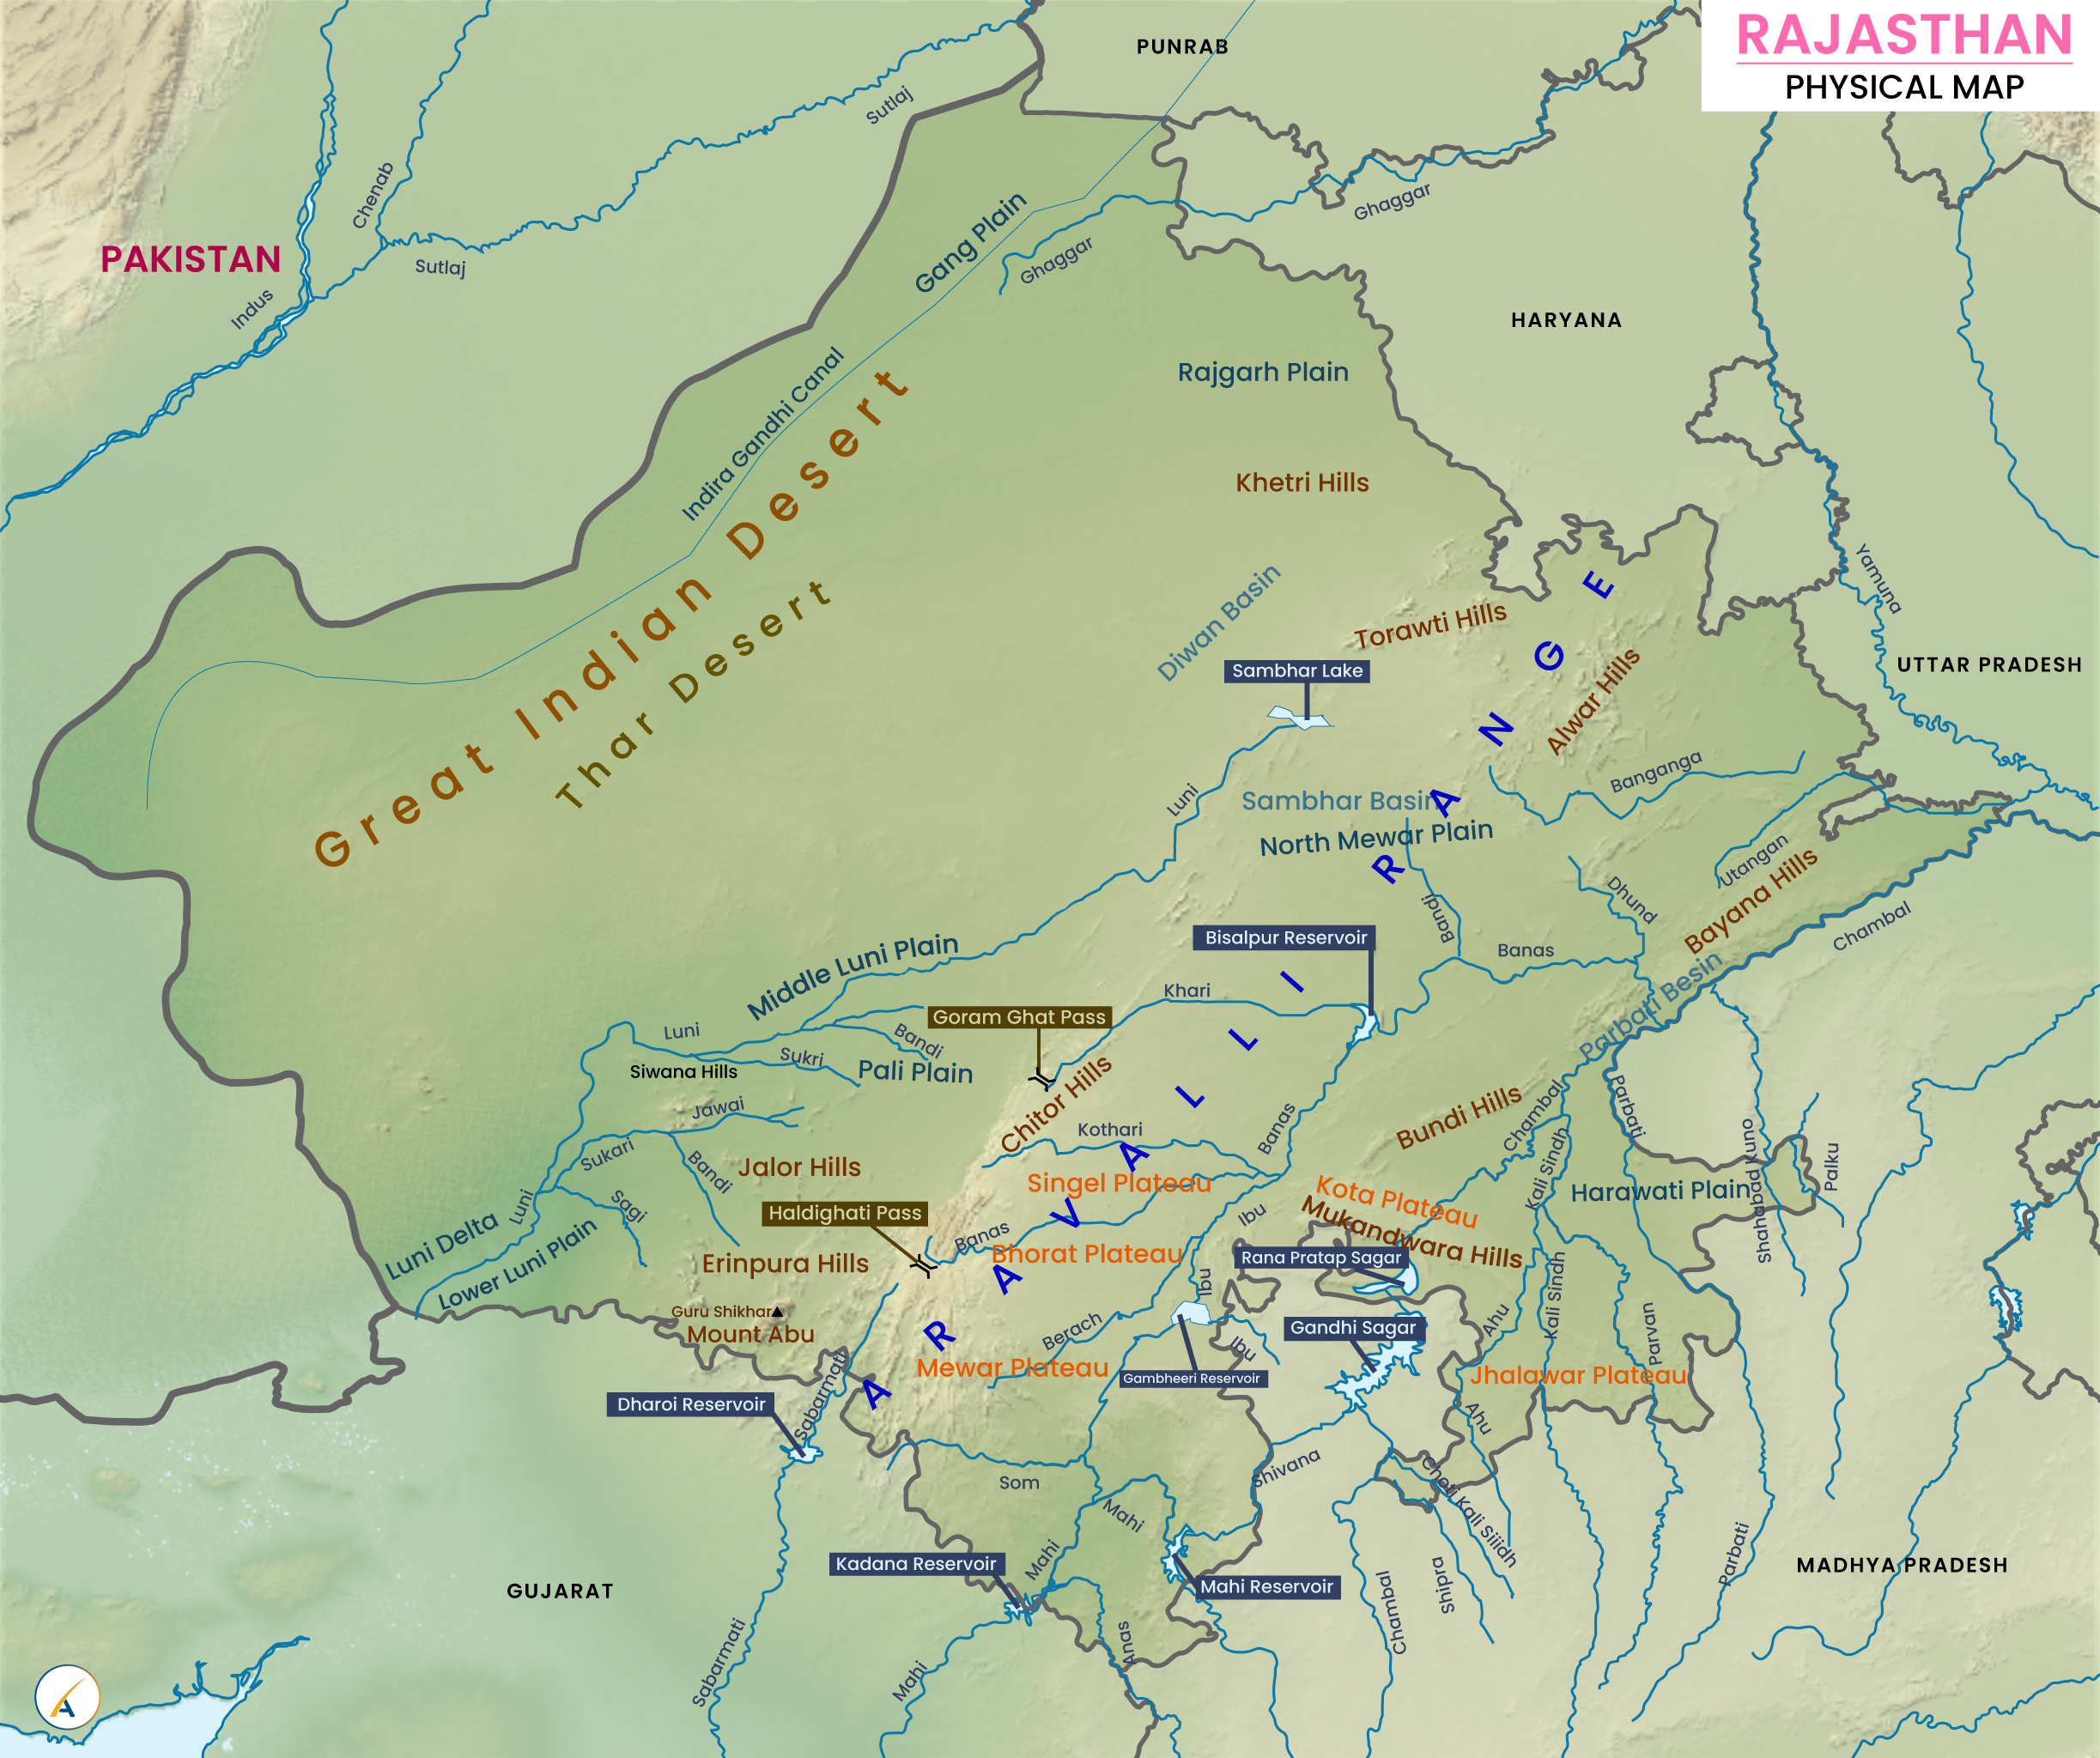 Rajasthan Physical Map